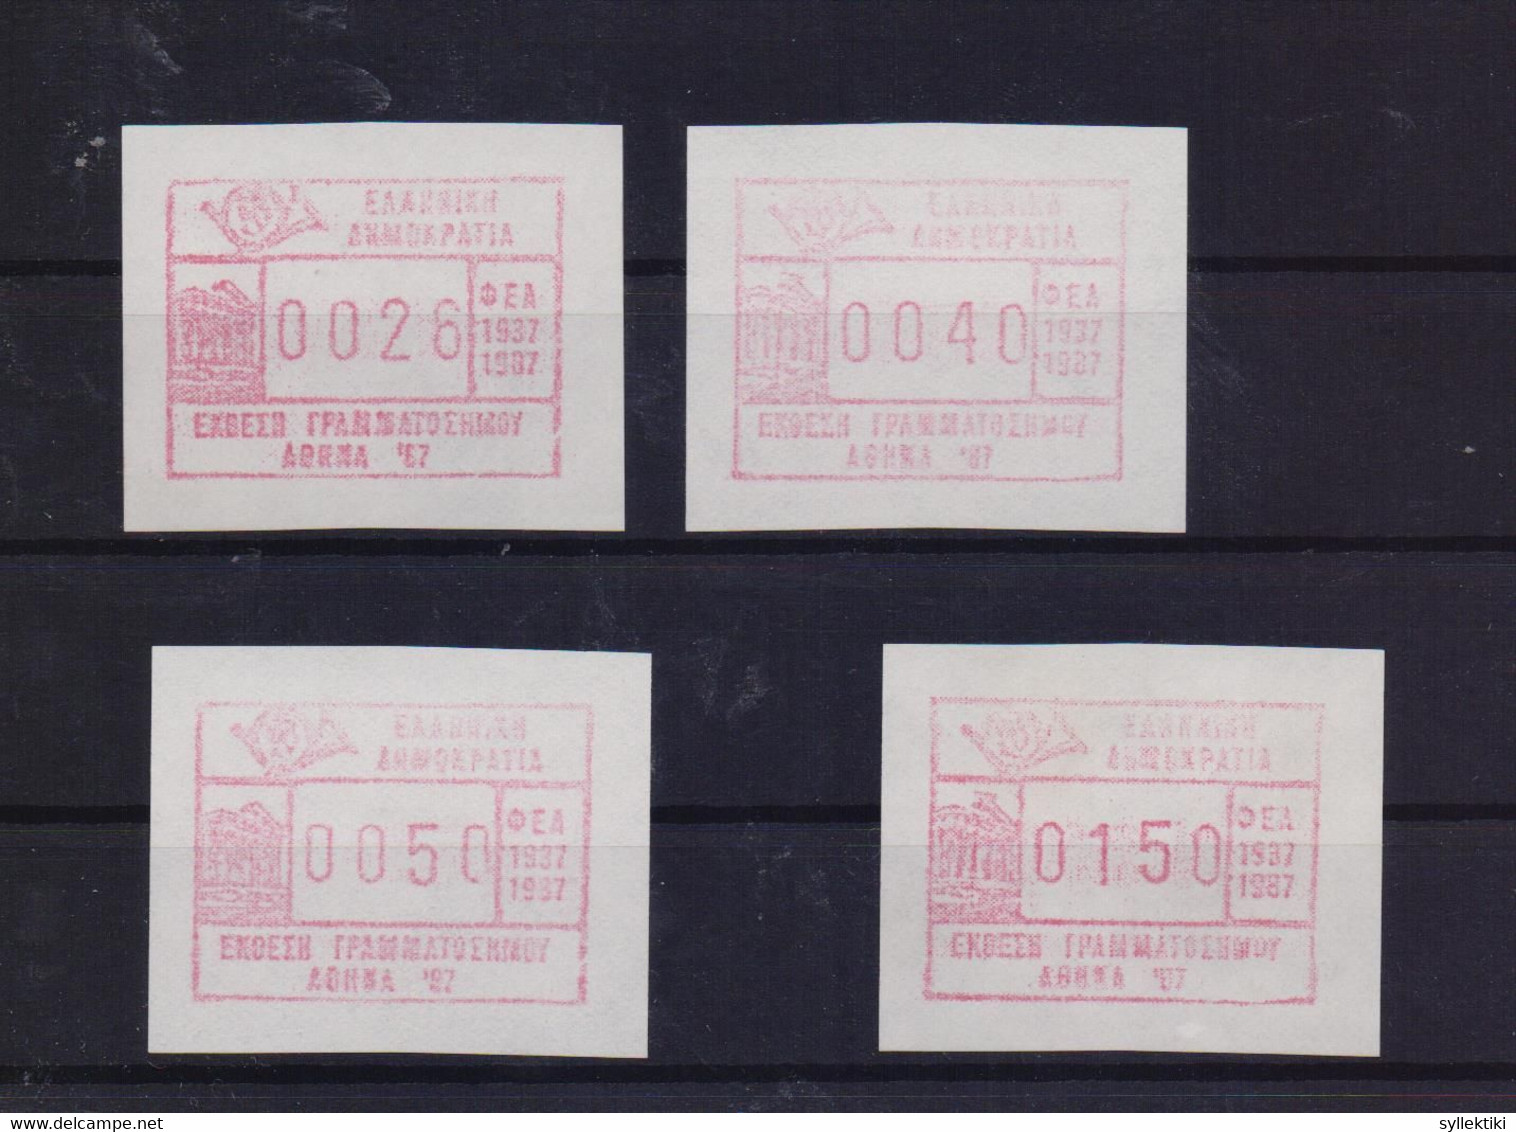 GREECE 1987 ATM FRAMA ΕΧΗΙΒΙΤΙΟΝ ΑΘΗΝΑ '87 TYPE ΙI COMPLETE SET OF 4 MNH STAMPS - Automaatzegels [ATM]